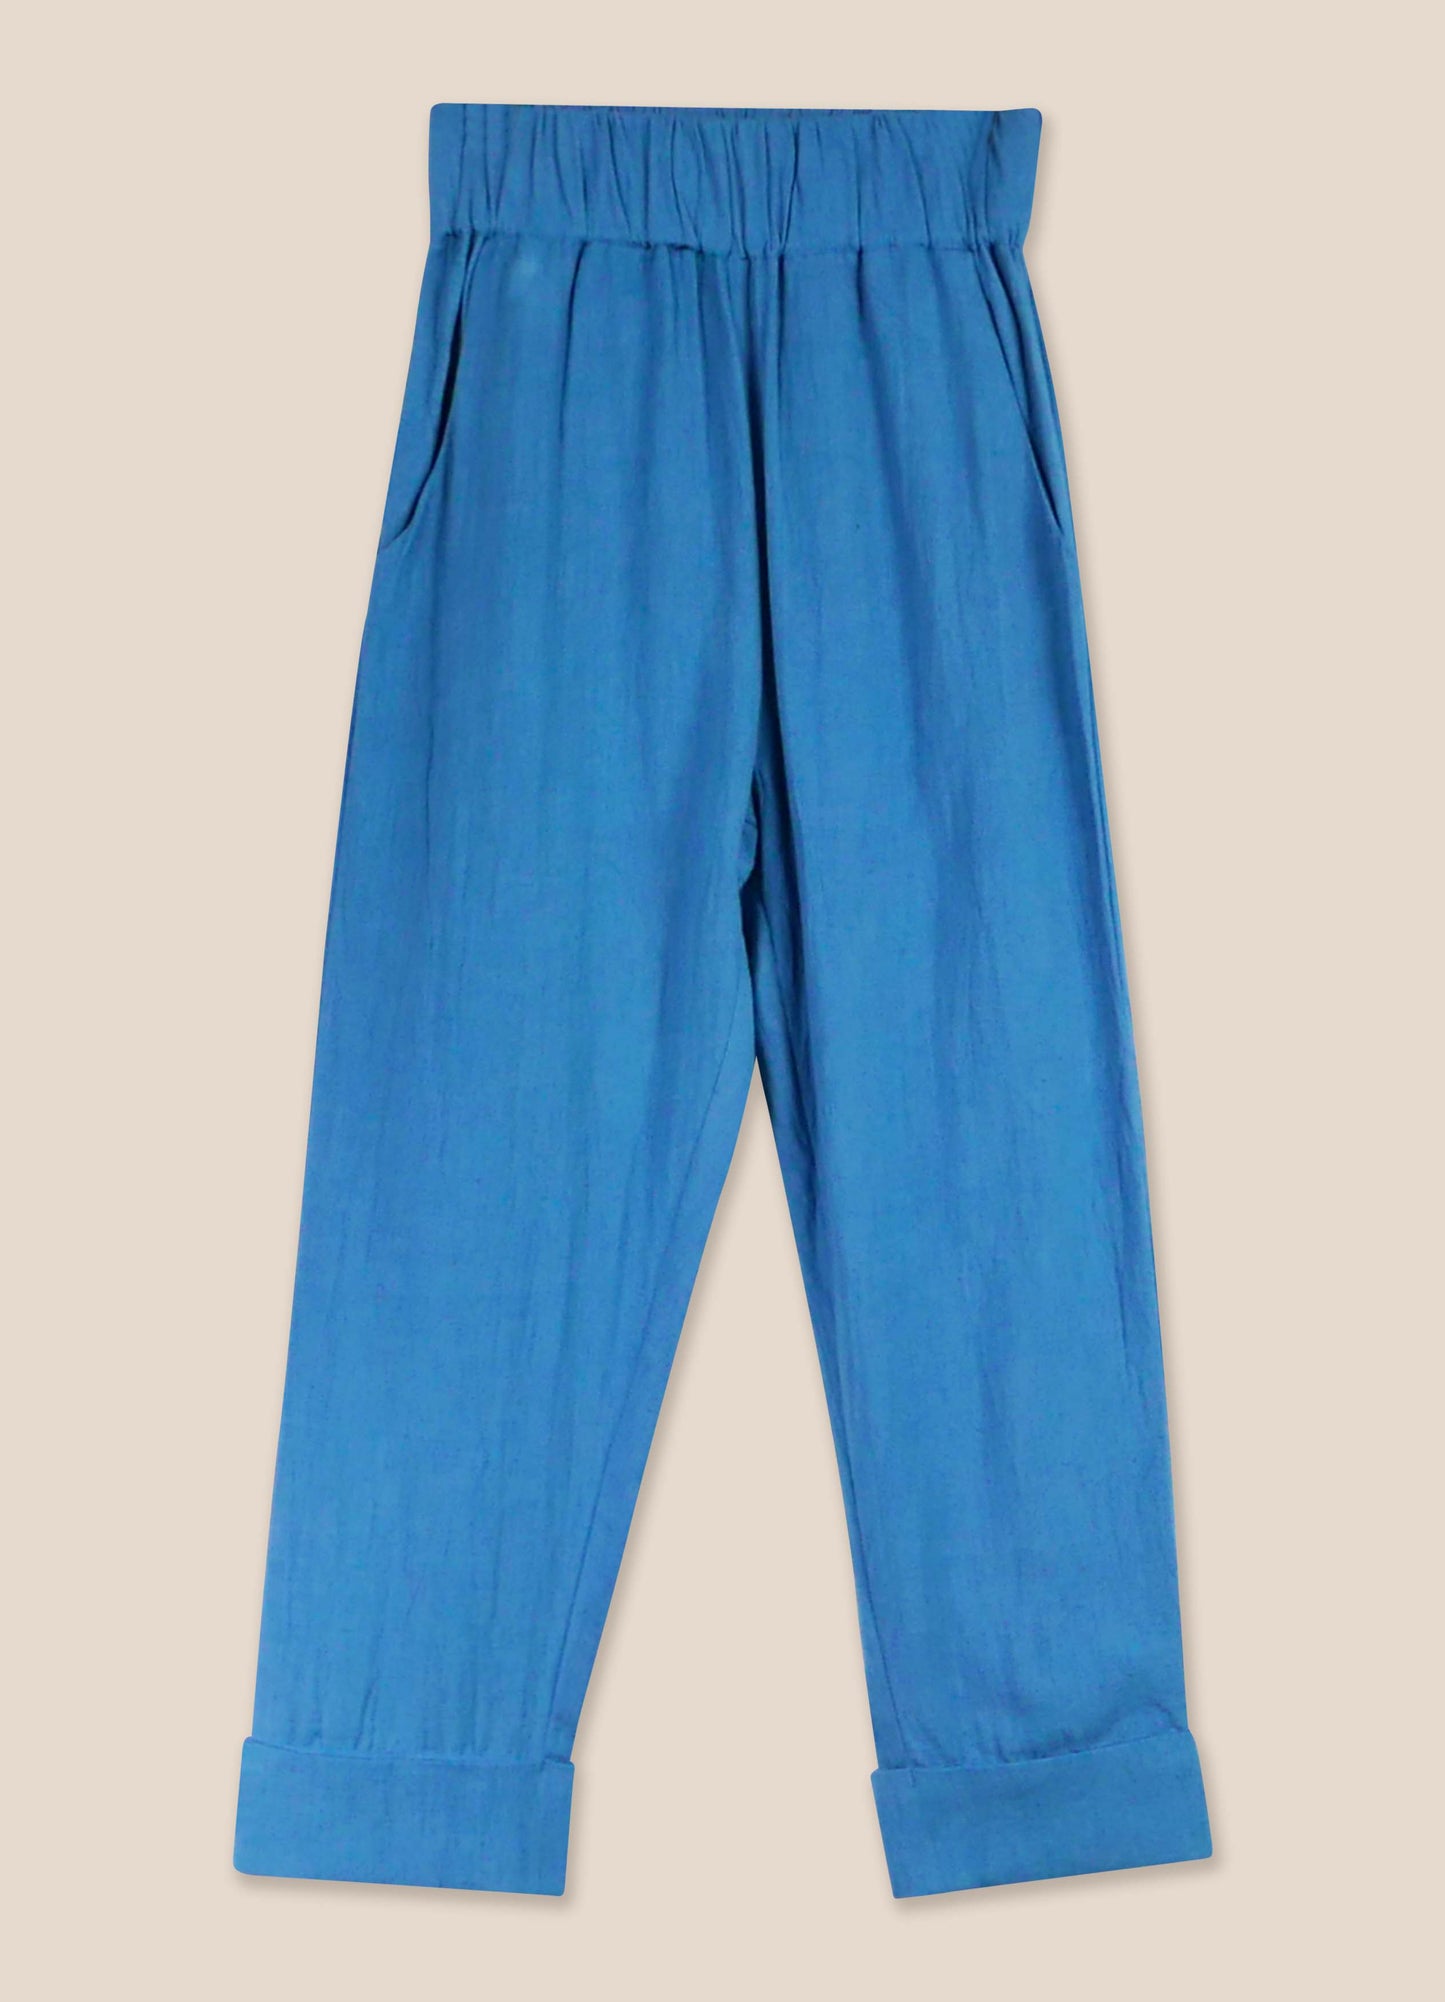 Trousers No. 10 Provincial Blue